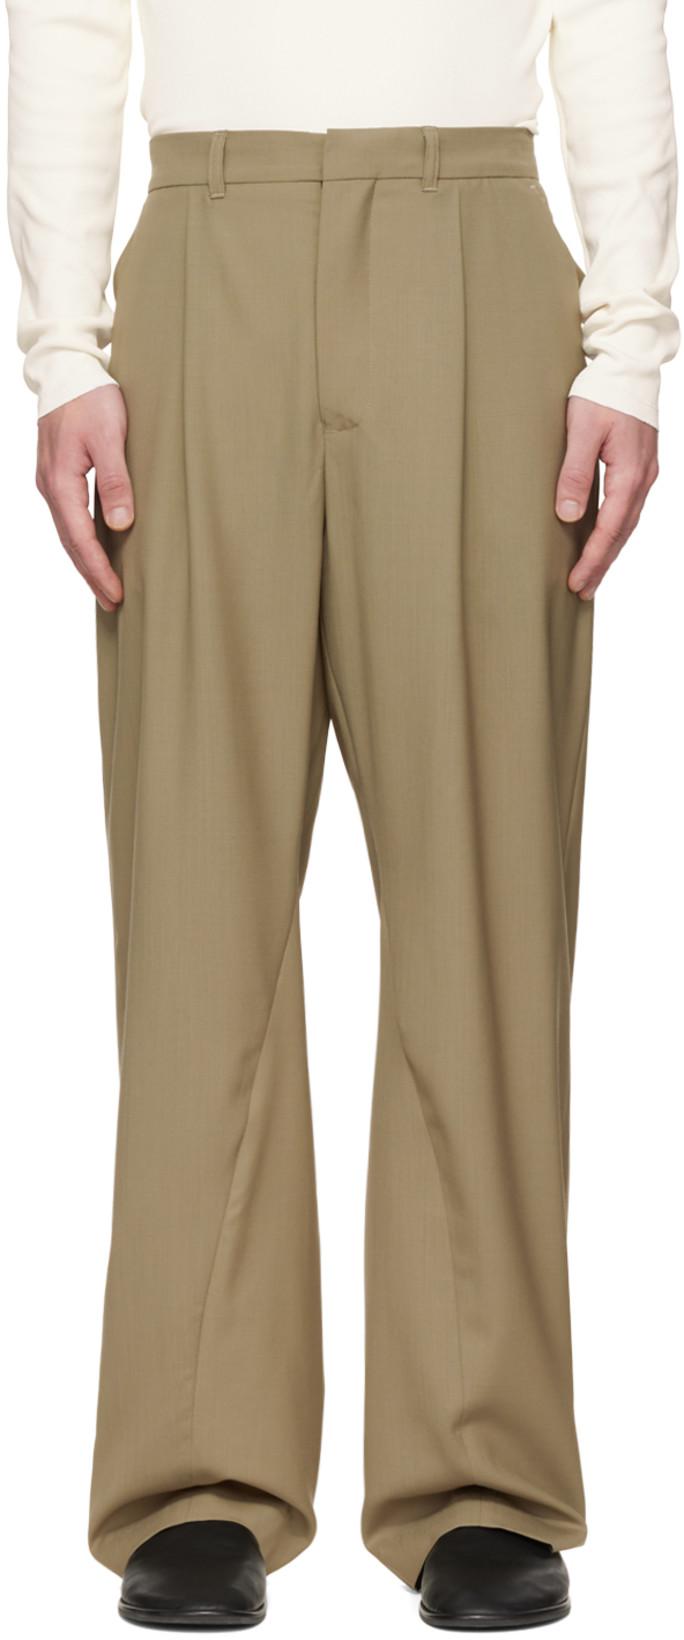 Khaki Macho Trousers by BIANCA SAUNDERS